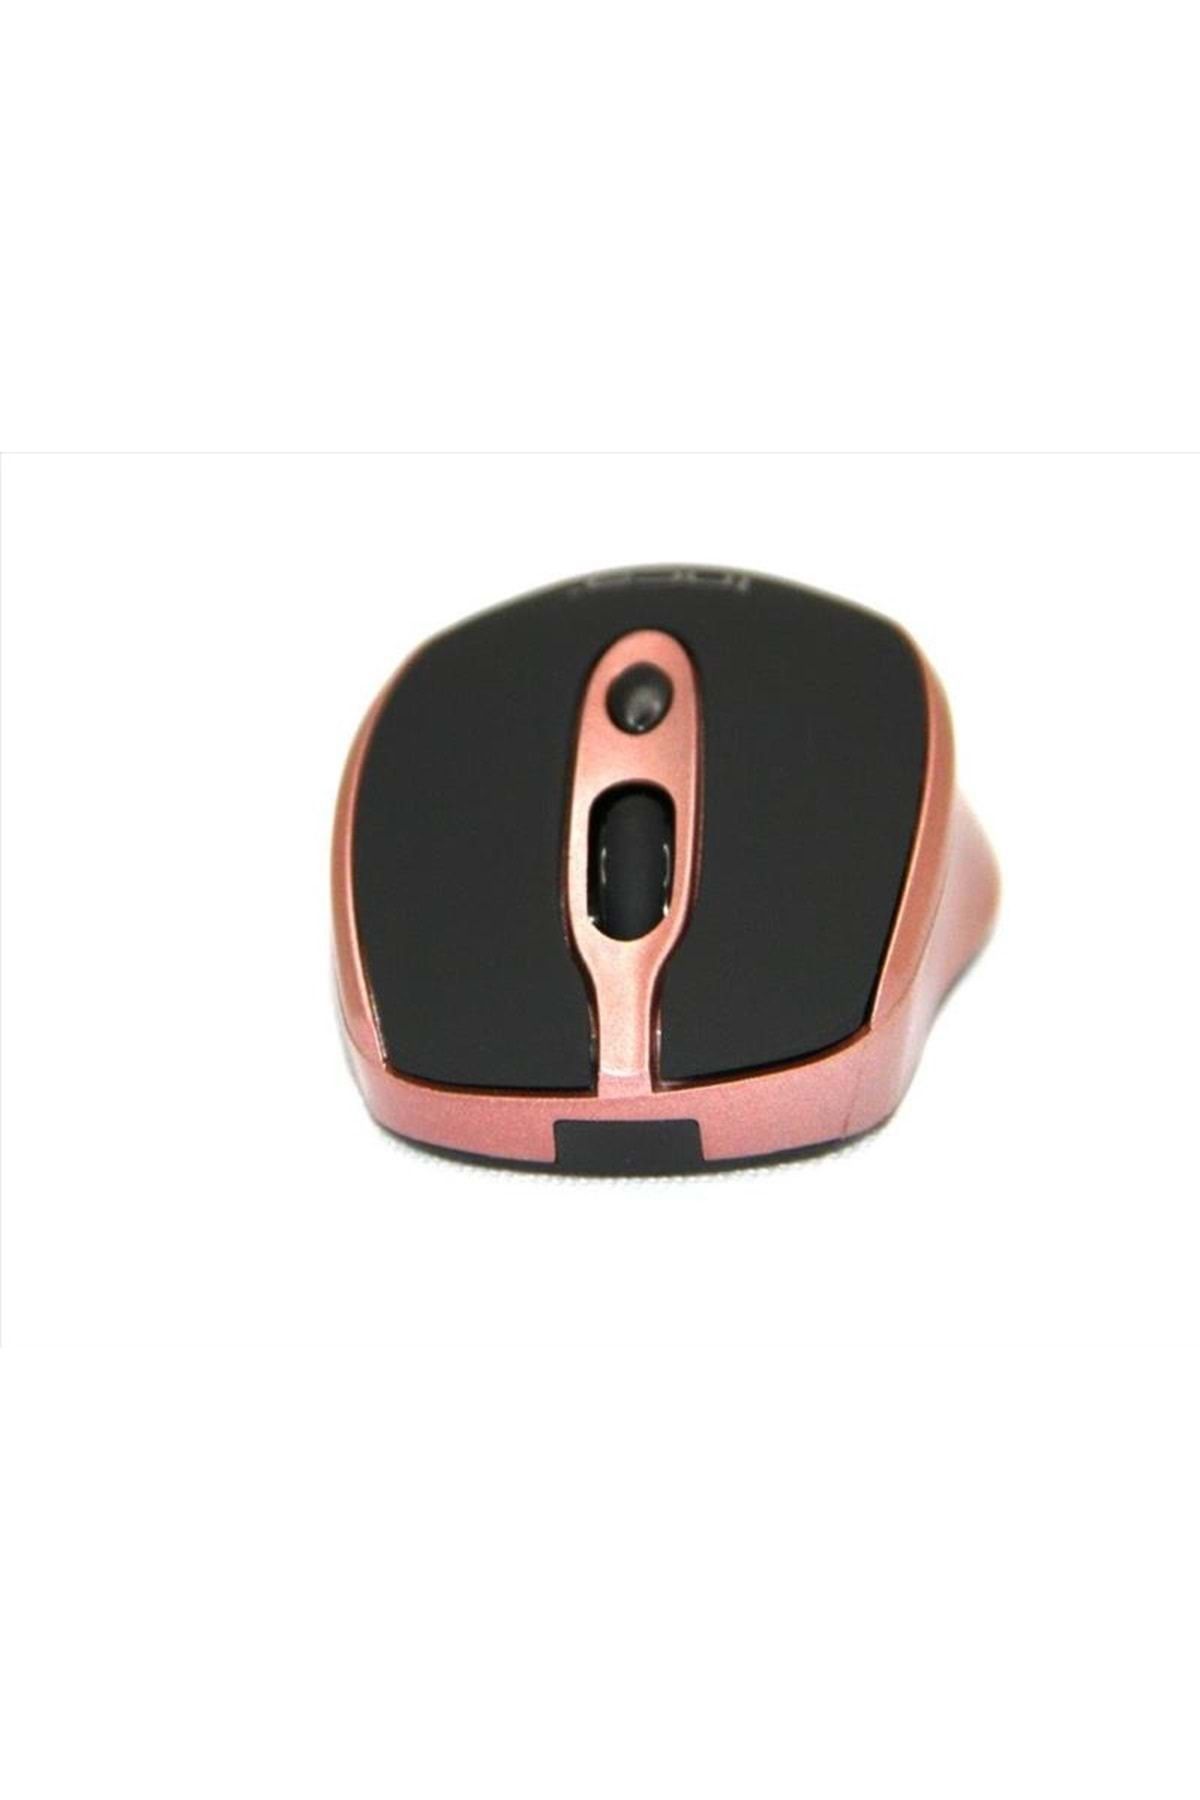 Inca IWM-396GT Nano Alıcılı Kablosuz 1600dpi ROSE GOLD Sessiz Mouse